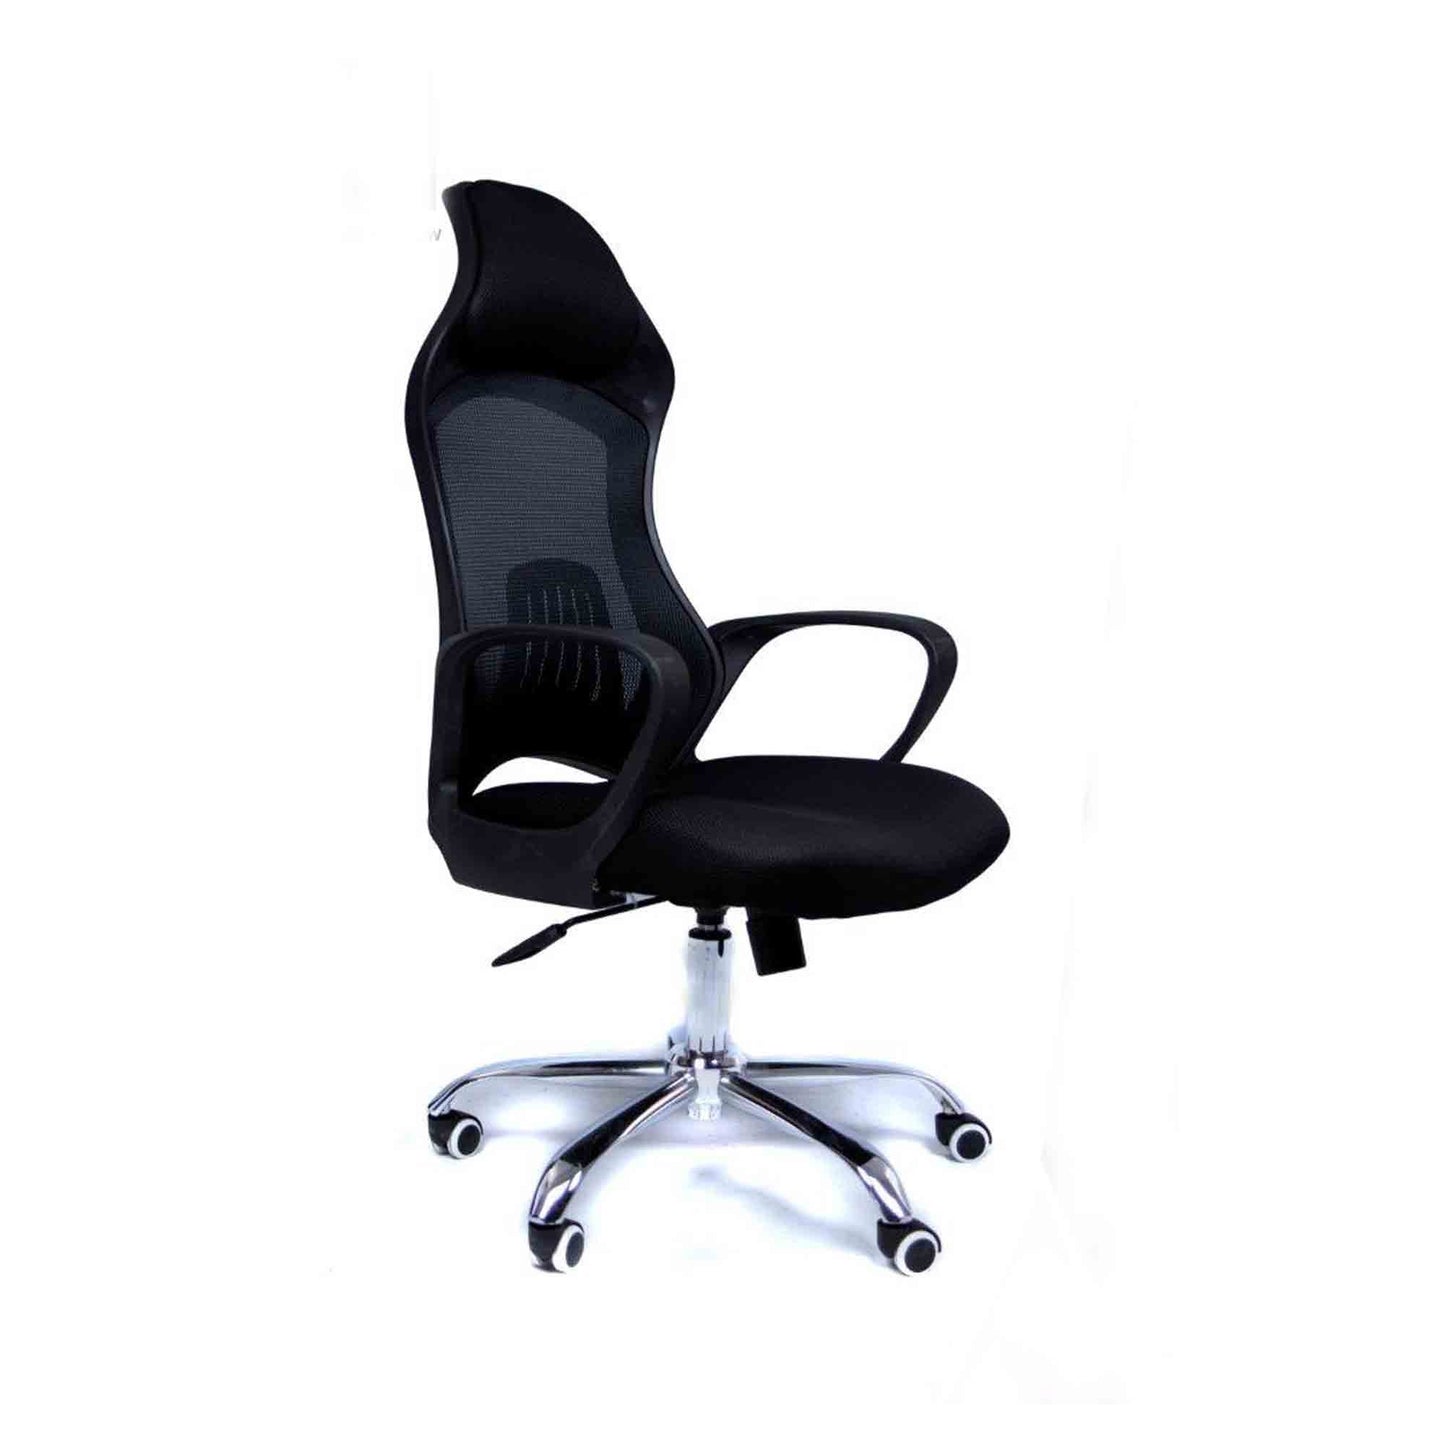 Office Chair - mch87hib